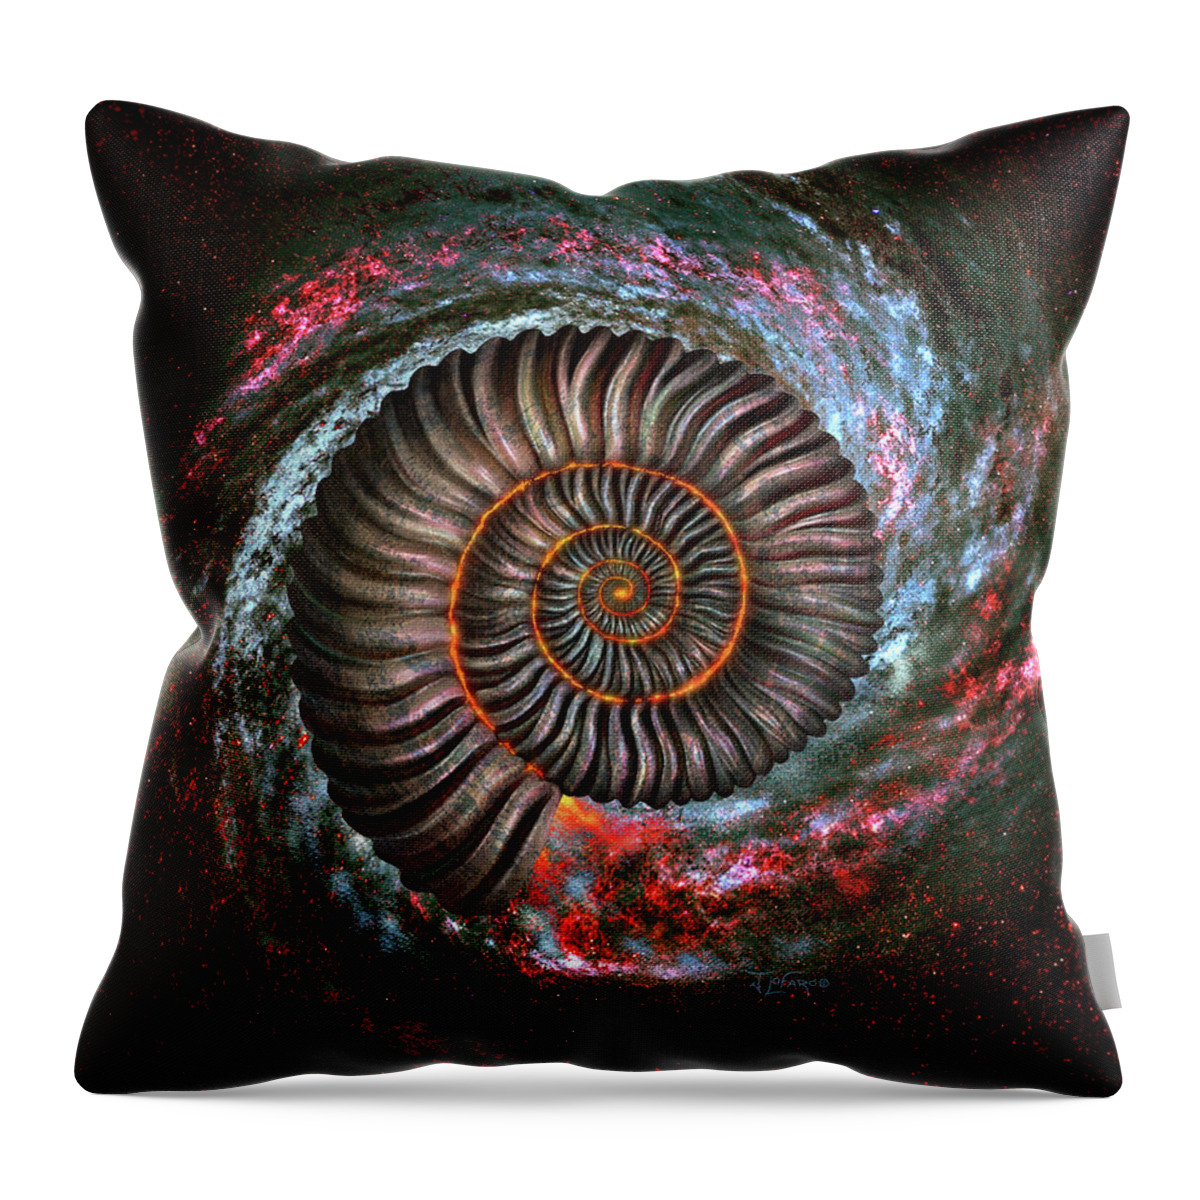 Ammonite Throw Pillow featuring the digital art Ammonite Galaxy by Jerry LoFaro